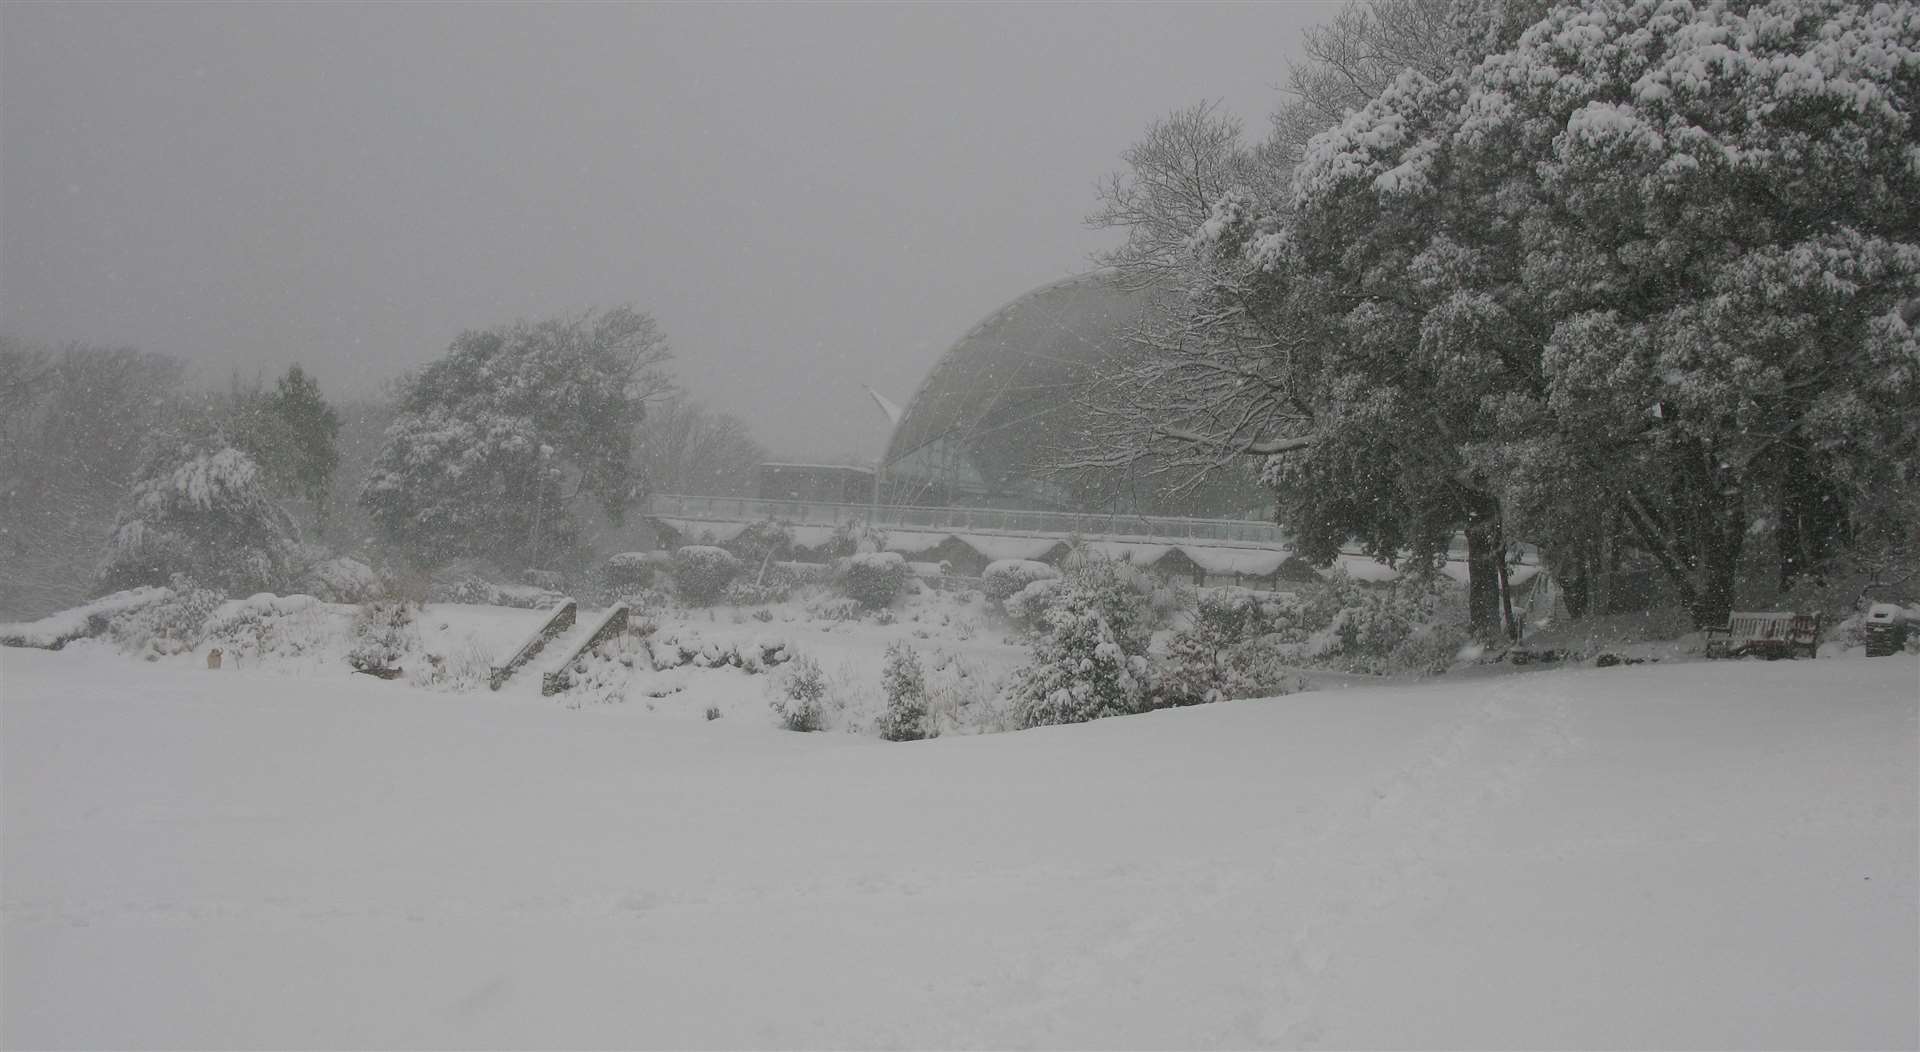 A snowy scene in Enbrook Park in 2020. Picture: Karen Dawney